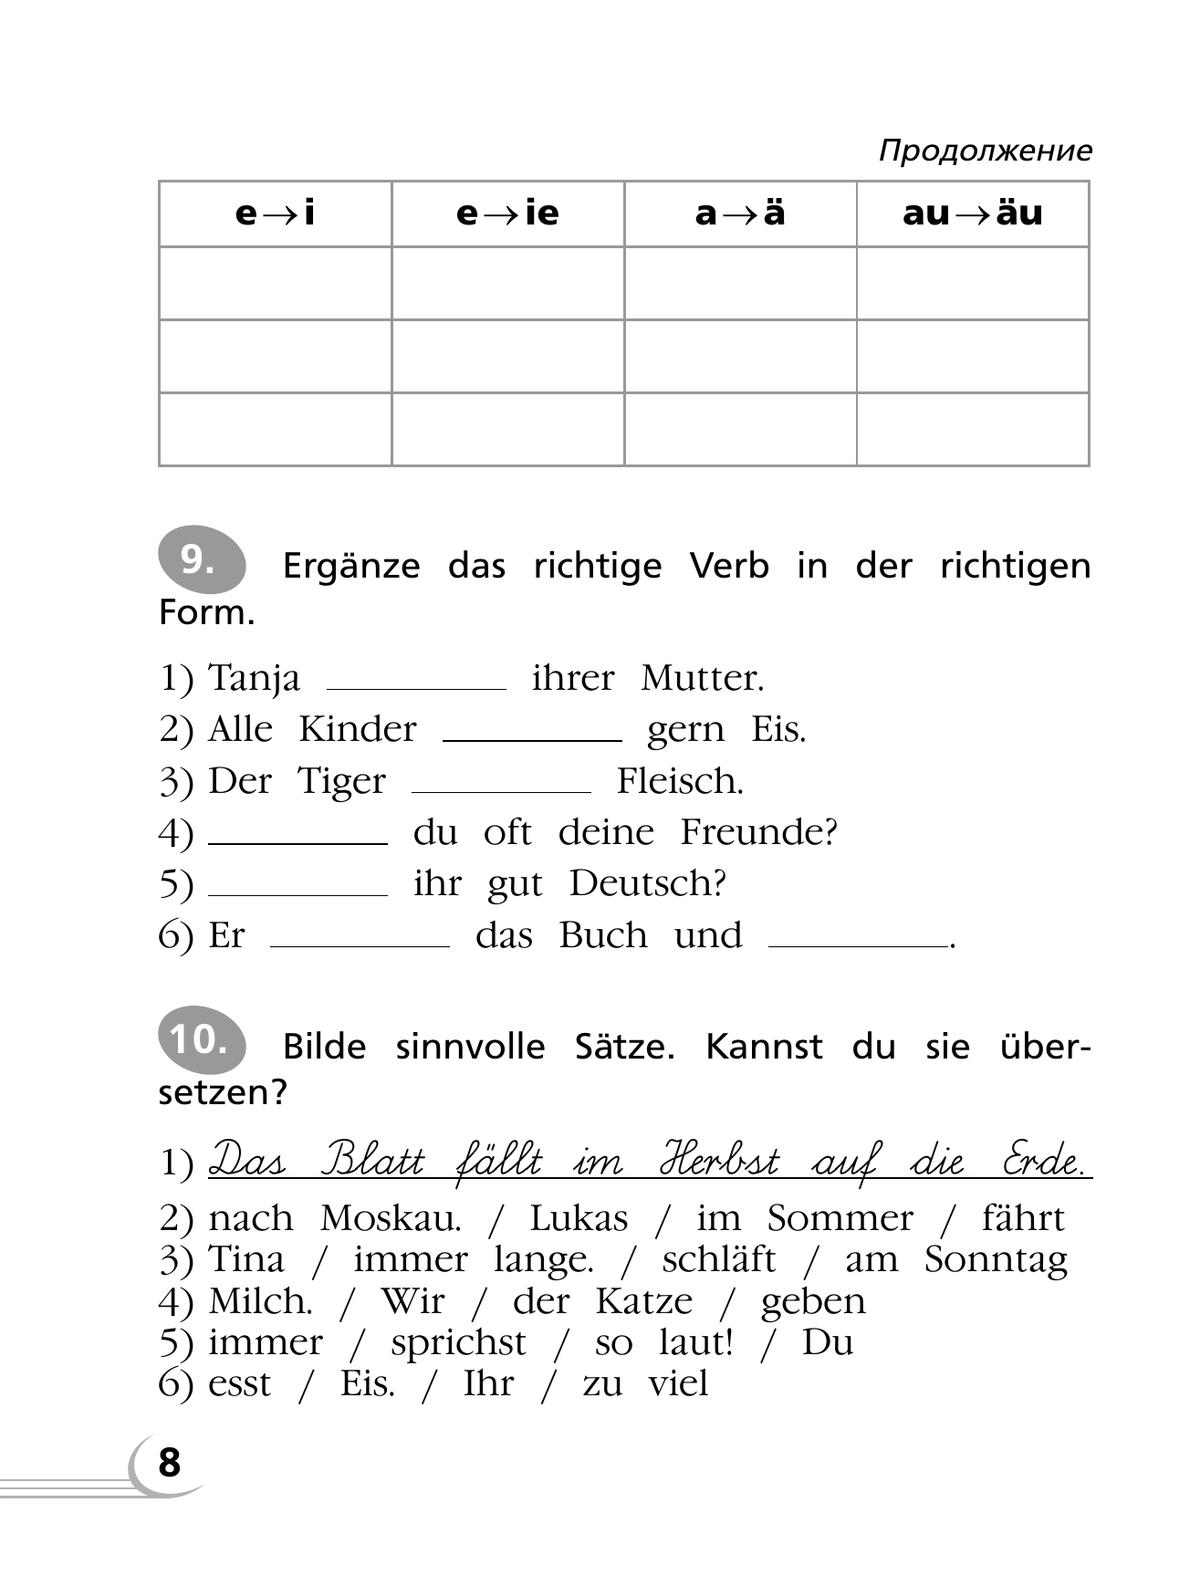 Немецкий язык. Грамматический тренажер. 4 класс 11